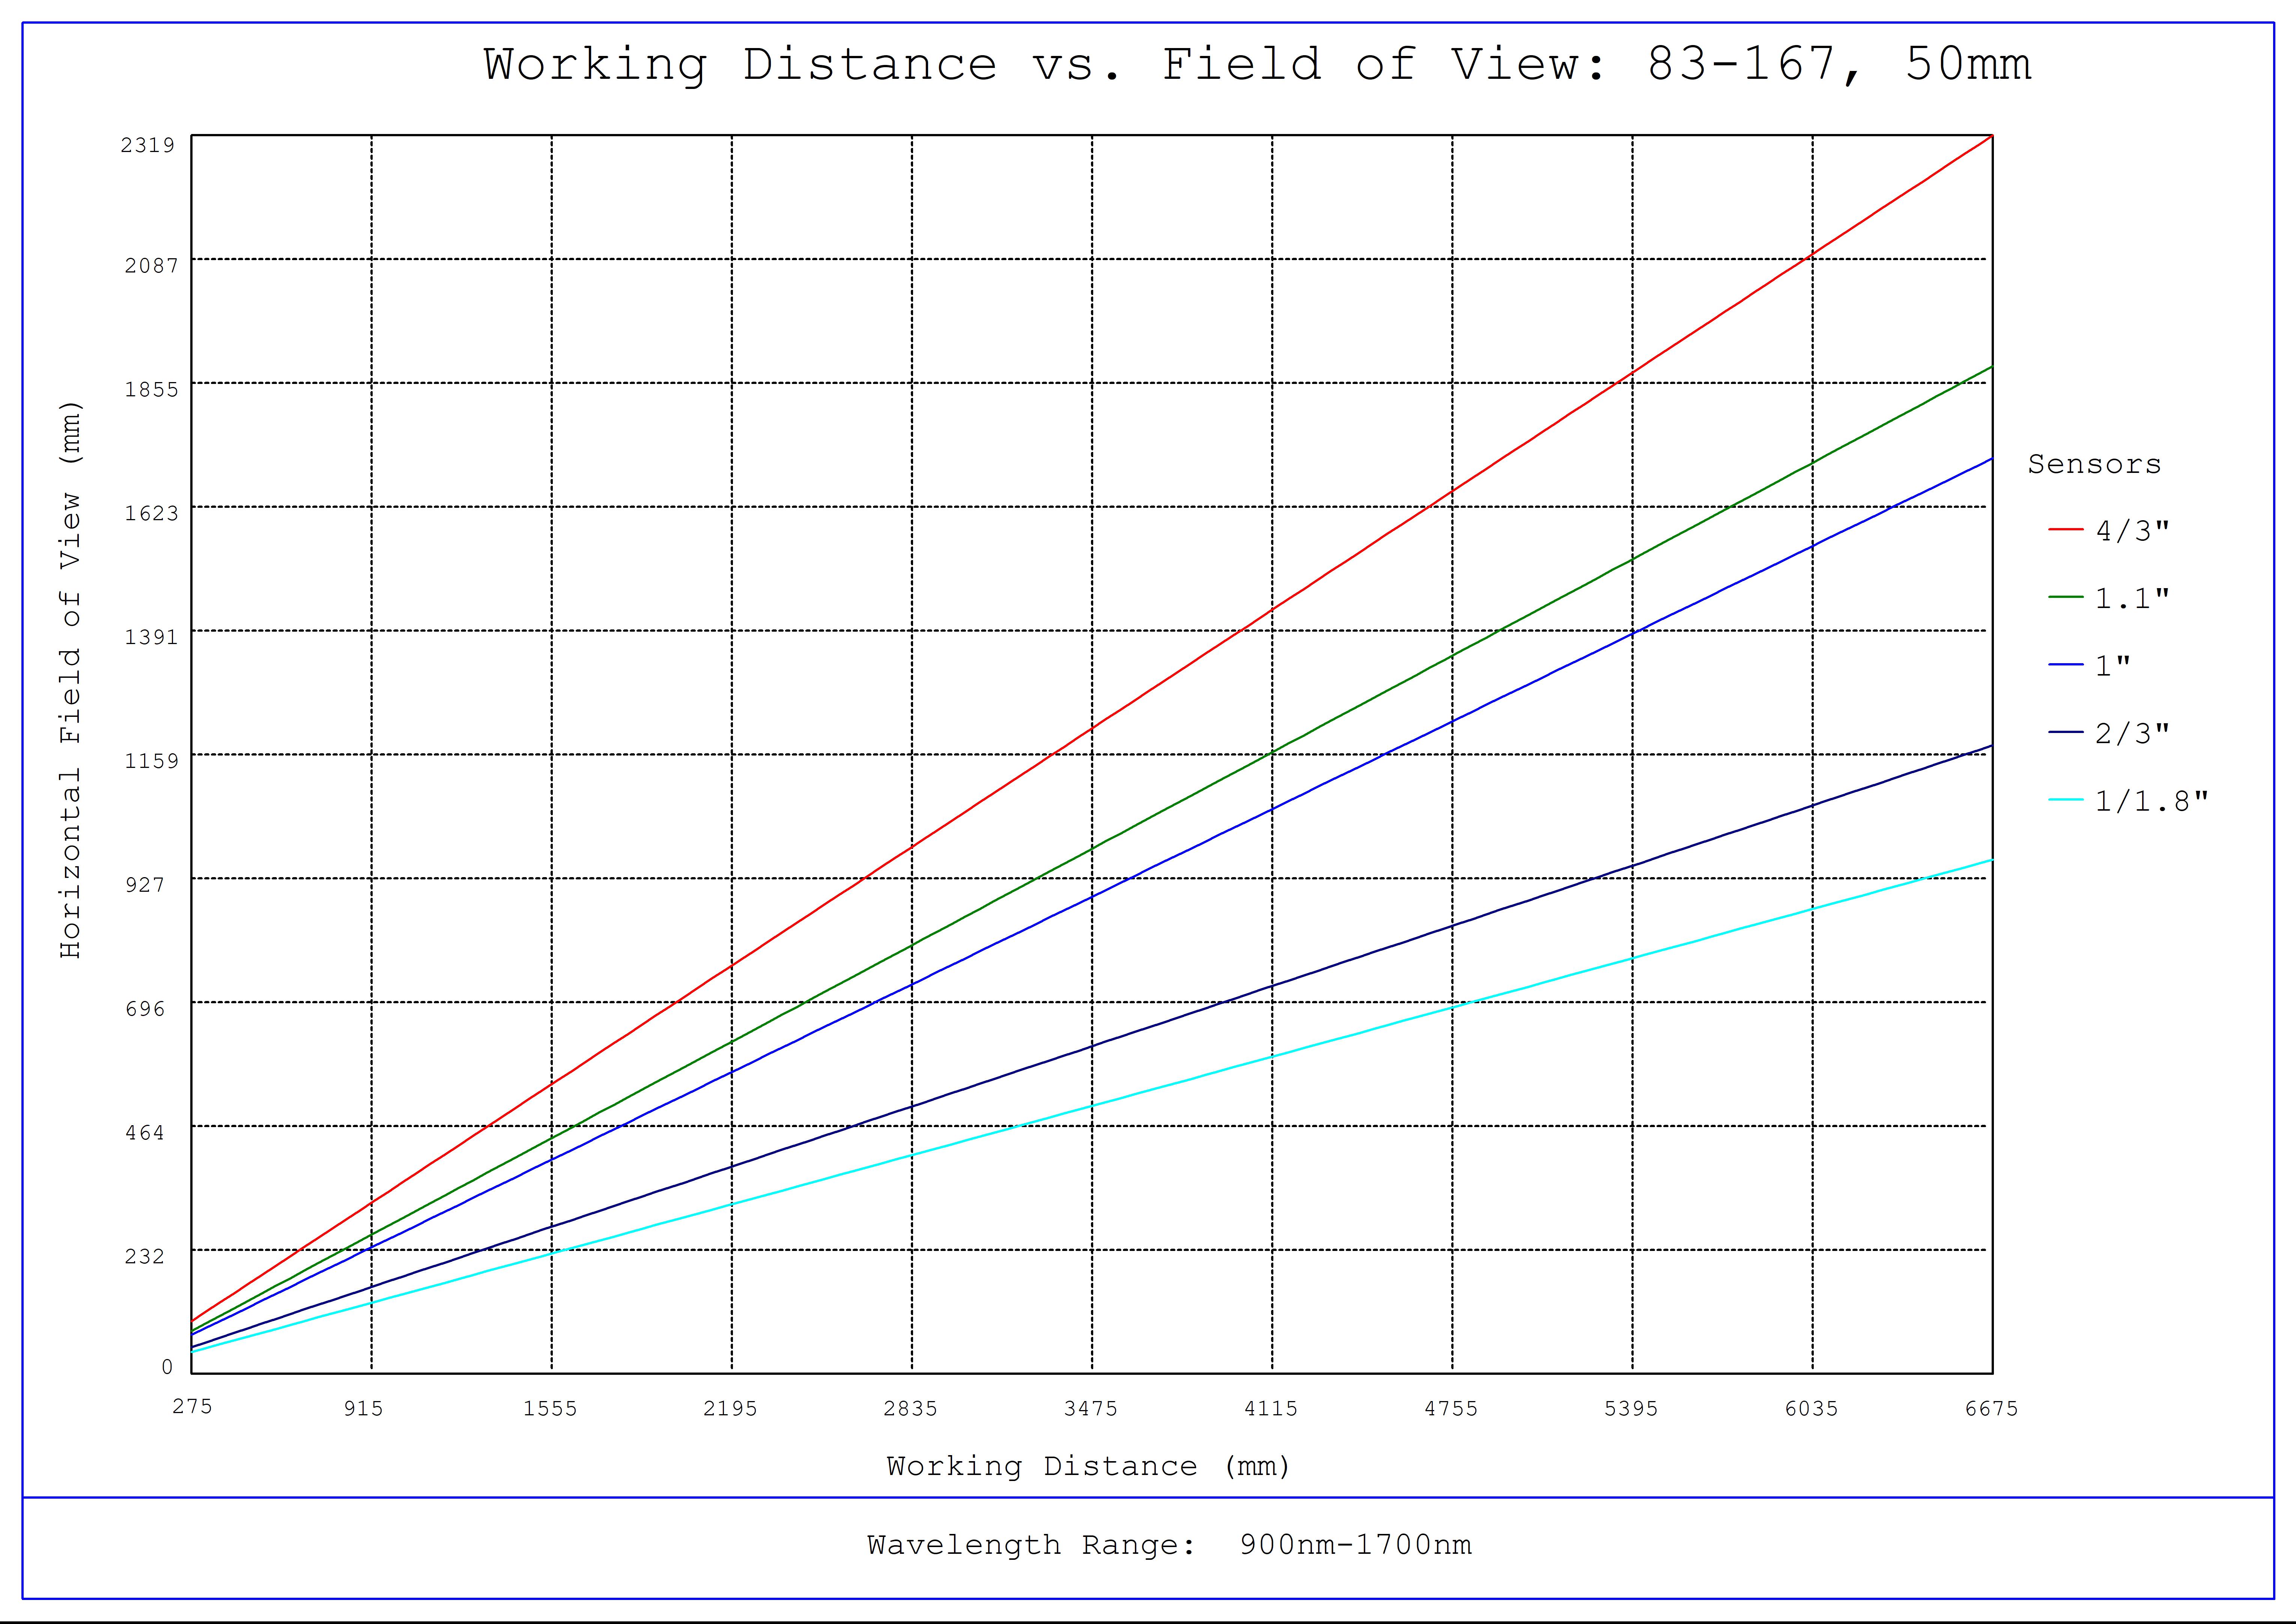 #83-167, 50mm SWIR Series Fixed Focal Length Lens, M42 x 1.0, Working Distance versus Field of View Plot